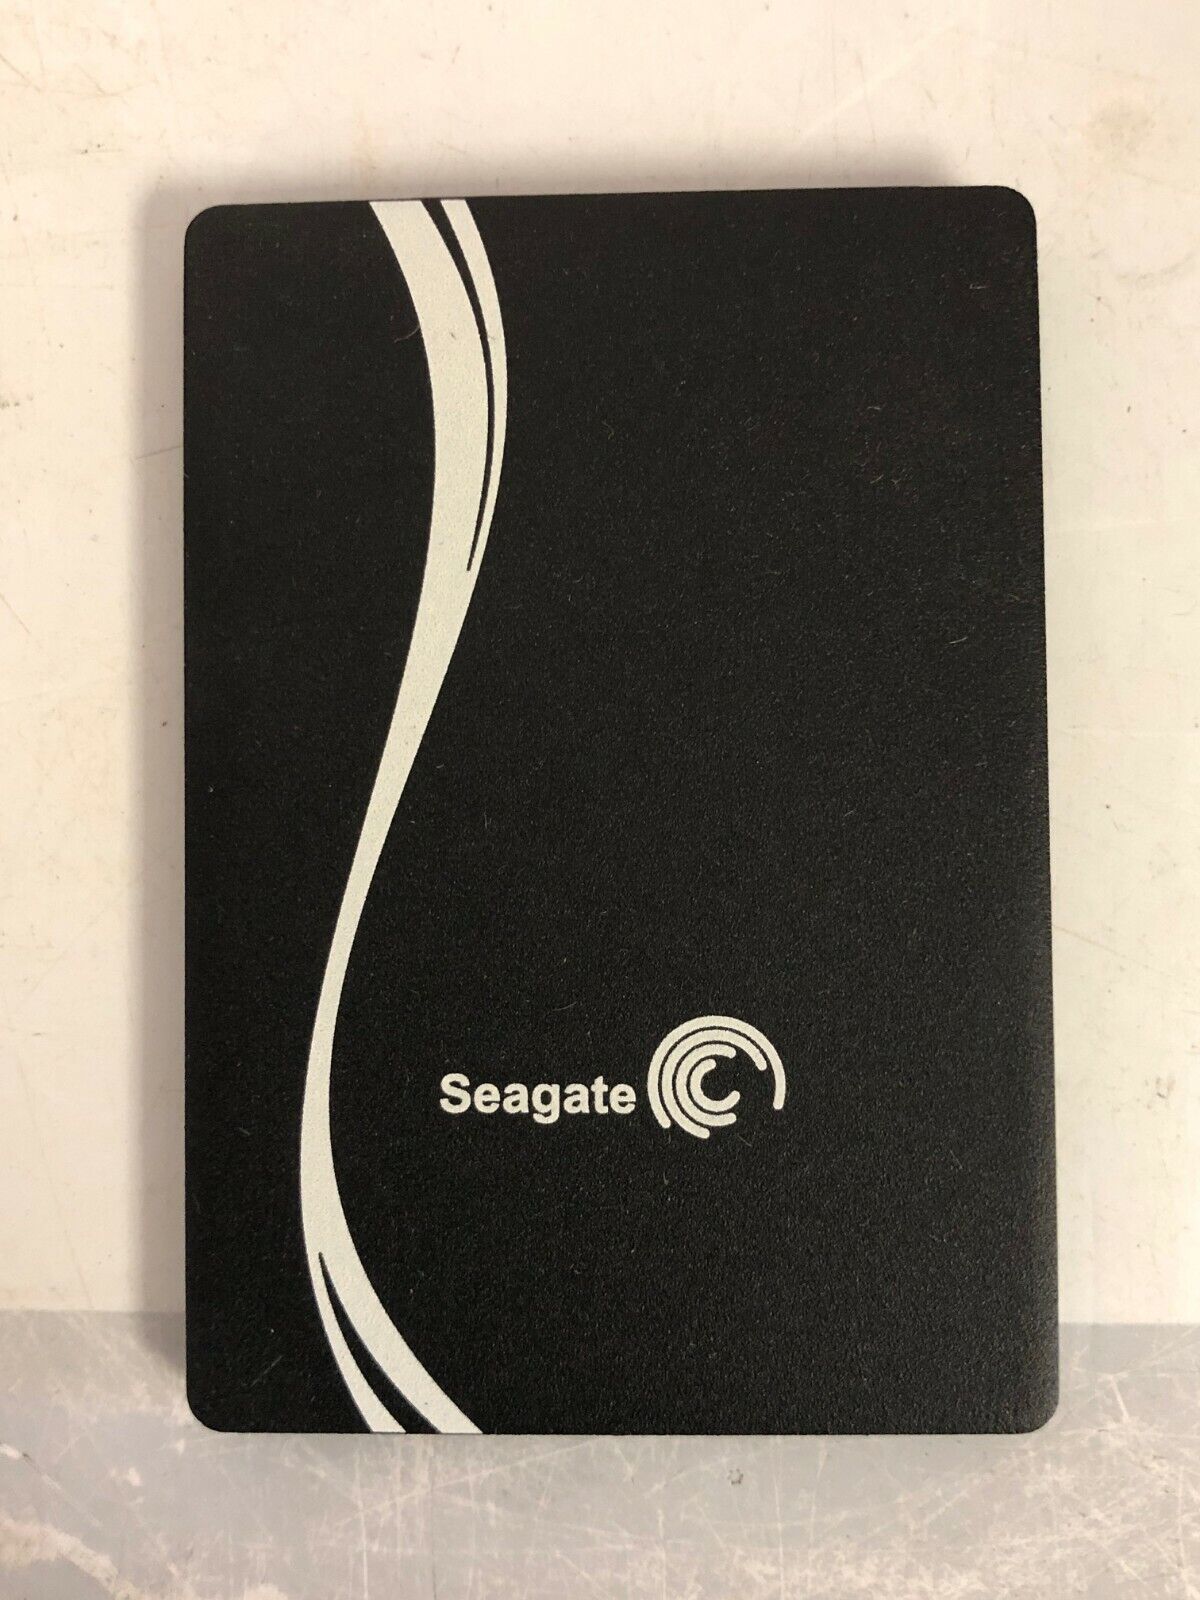 Seagate 600 SSD 480GB MLC SSD Solid State Drive ST480HM000